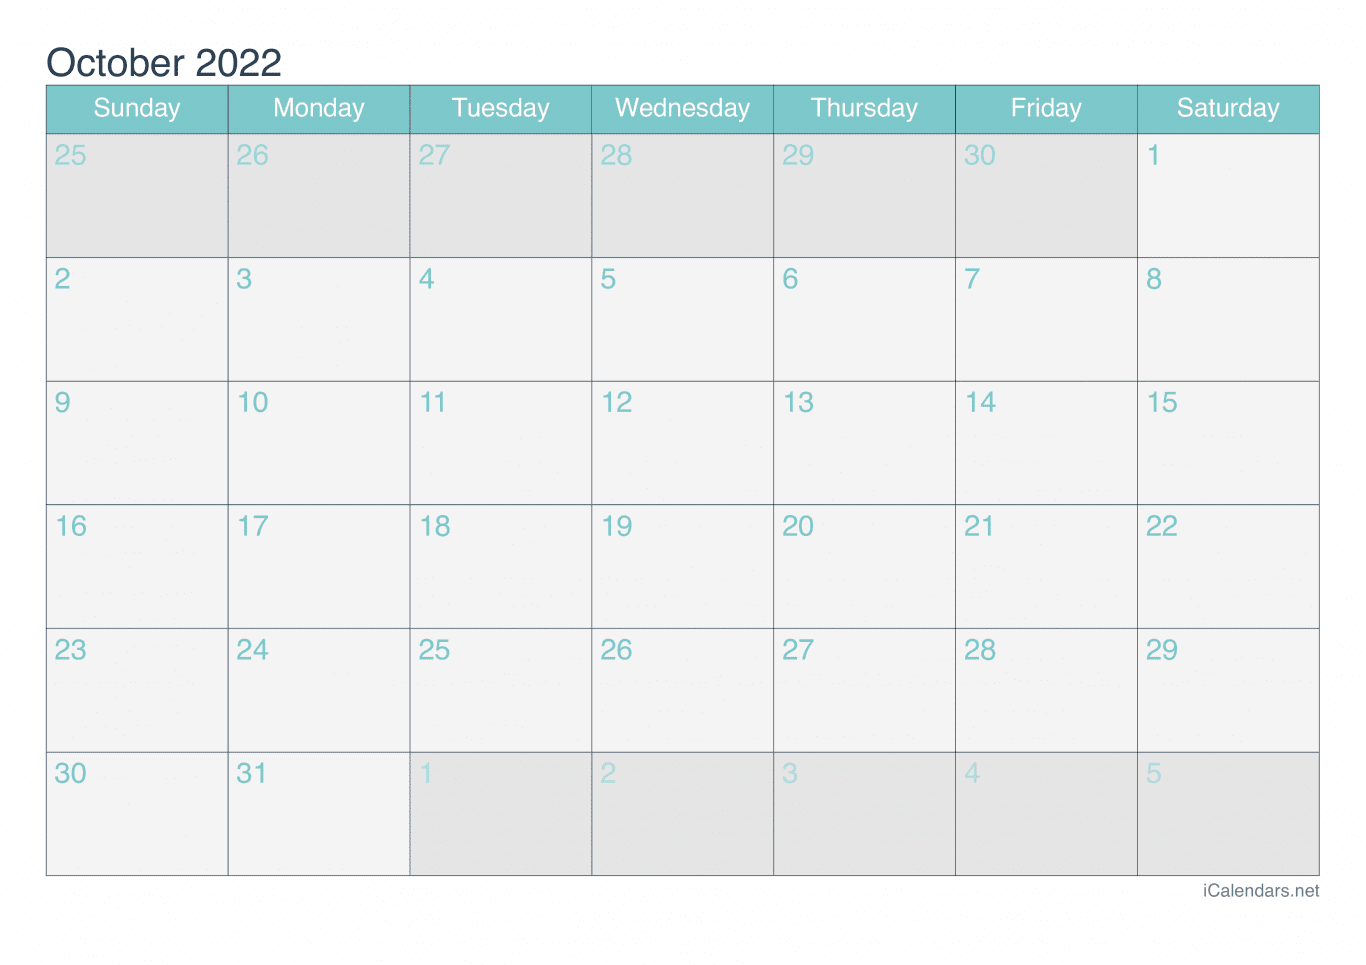 2022 October Calendar - Turquoise